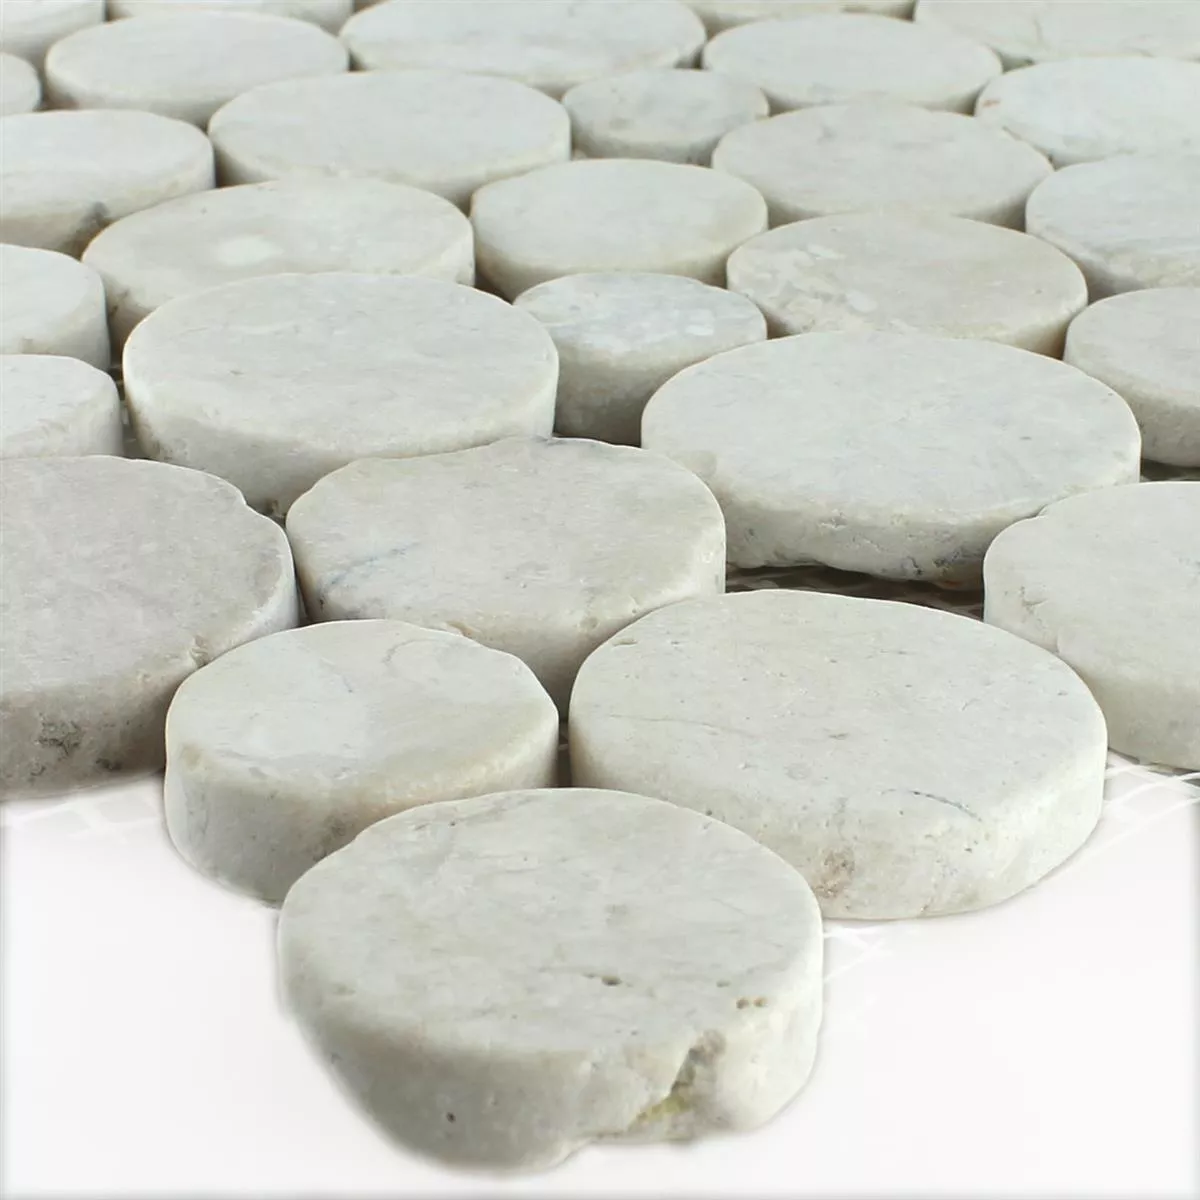 Sample Mosaic Tiles River Pebbles Coin Round White